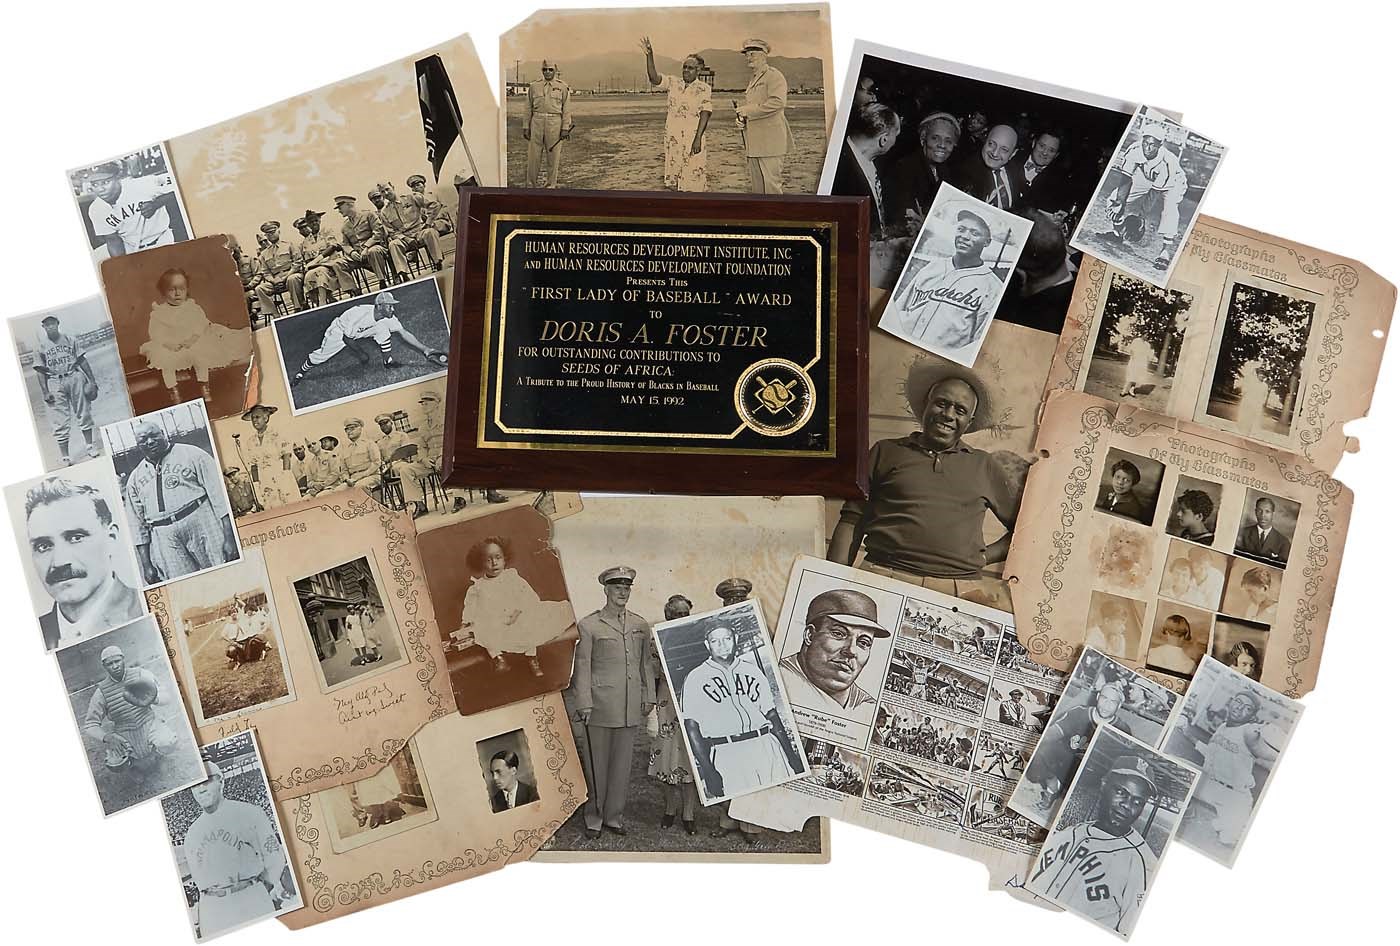 Negro League, Latin, Japanese & International Base - Family Photographs + More from Rube Foster Family